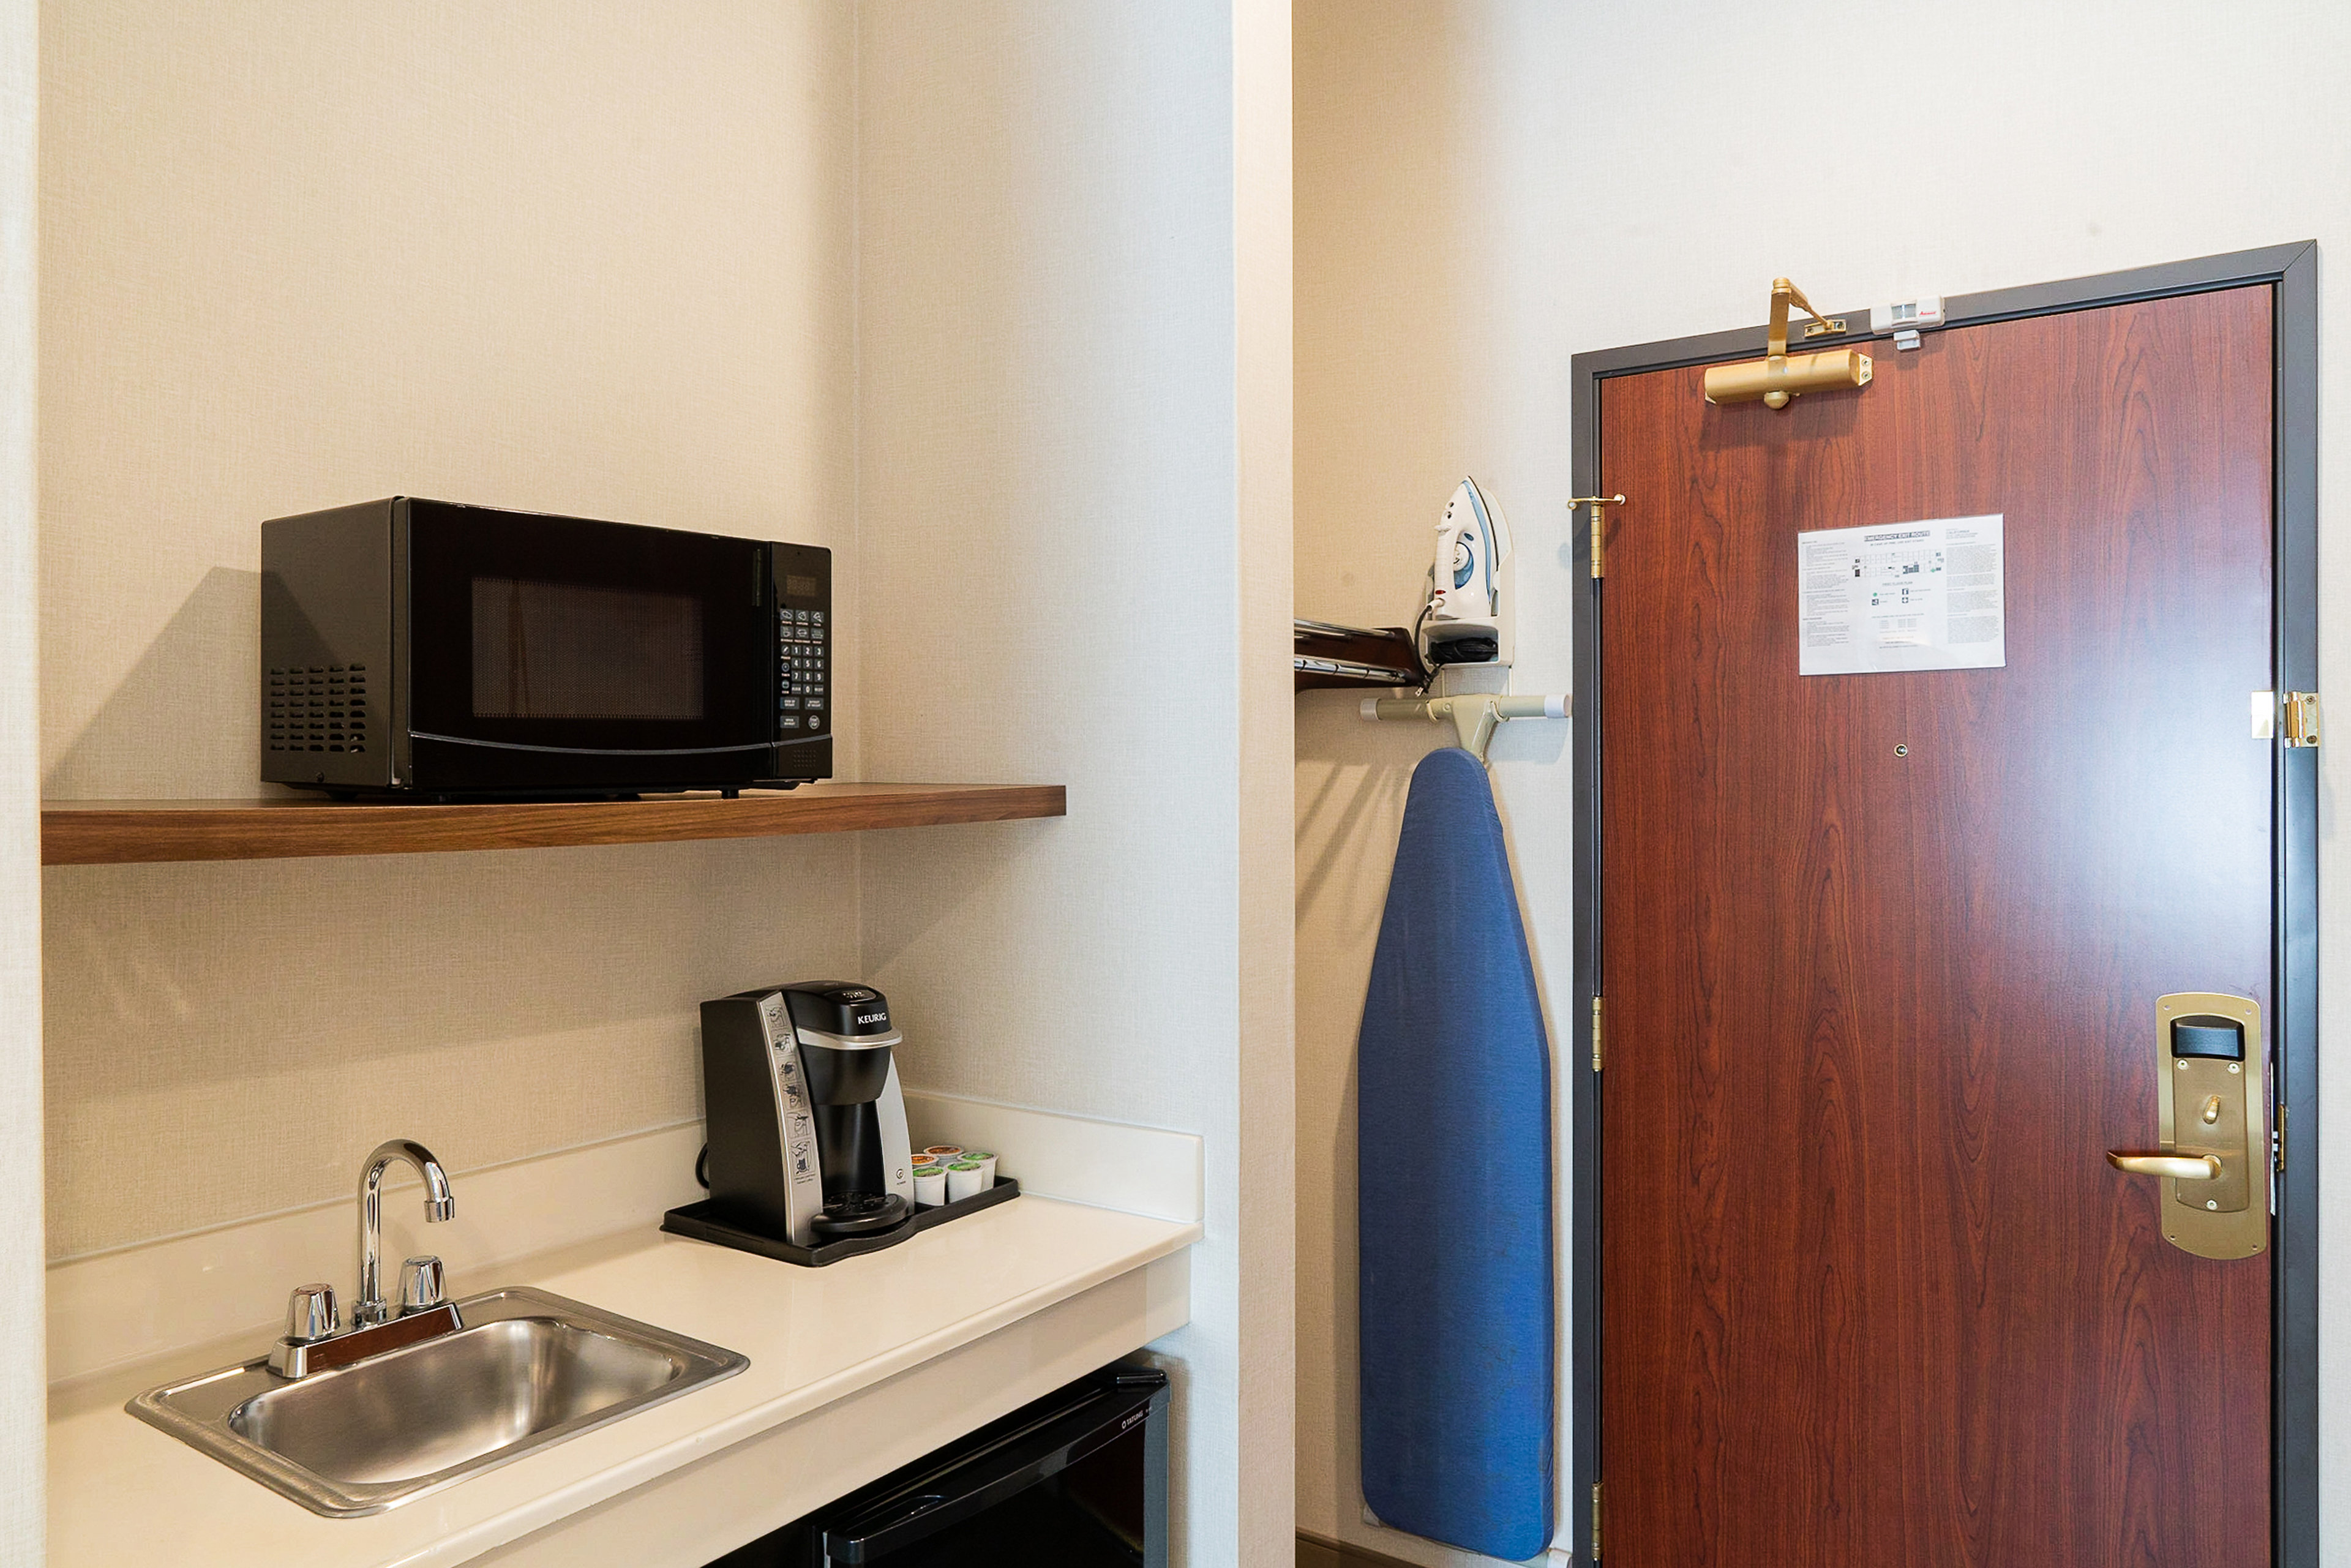 Keurig, Microwave, Mini fridge, Iron and Iron Board in all rooms. 